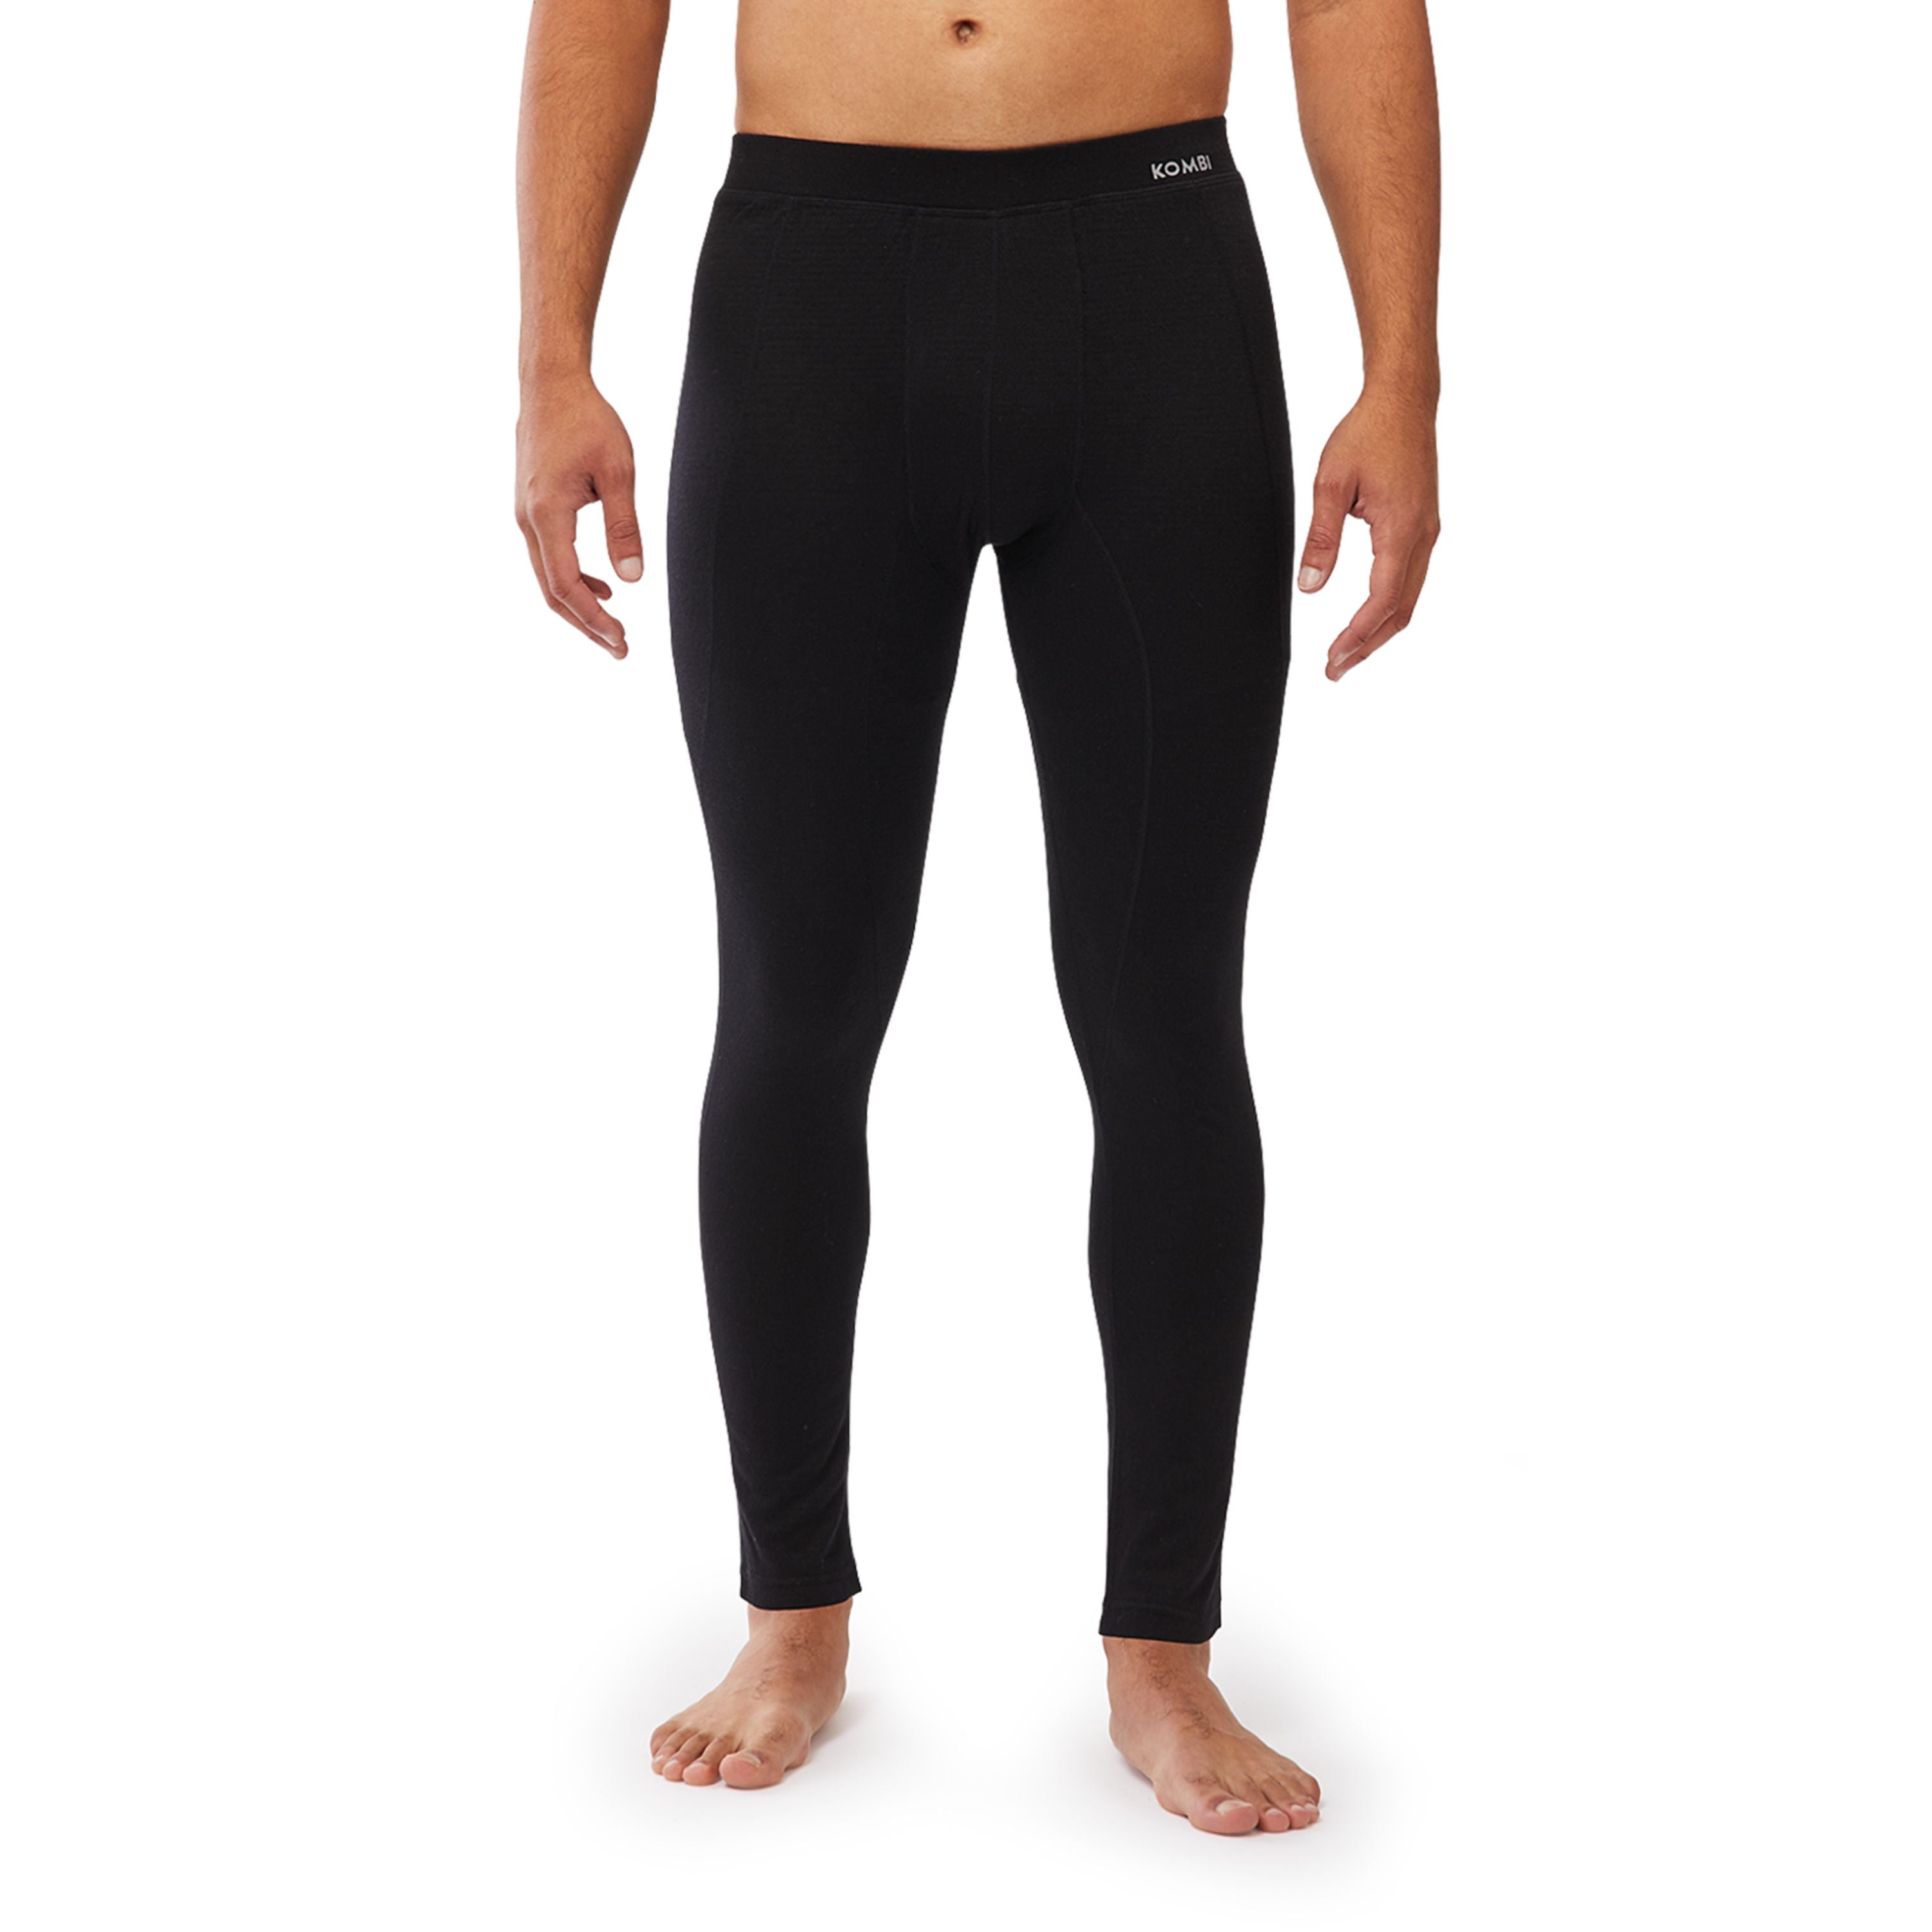 Pantalon sous-vêtement Merinomix Pro - Homme||Merinomix Pro Base layer  bottom - Men’s